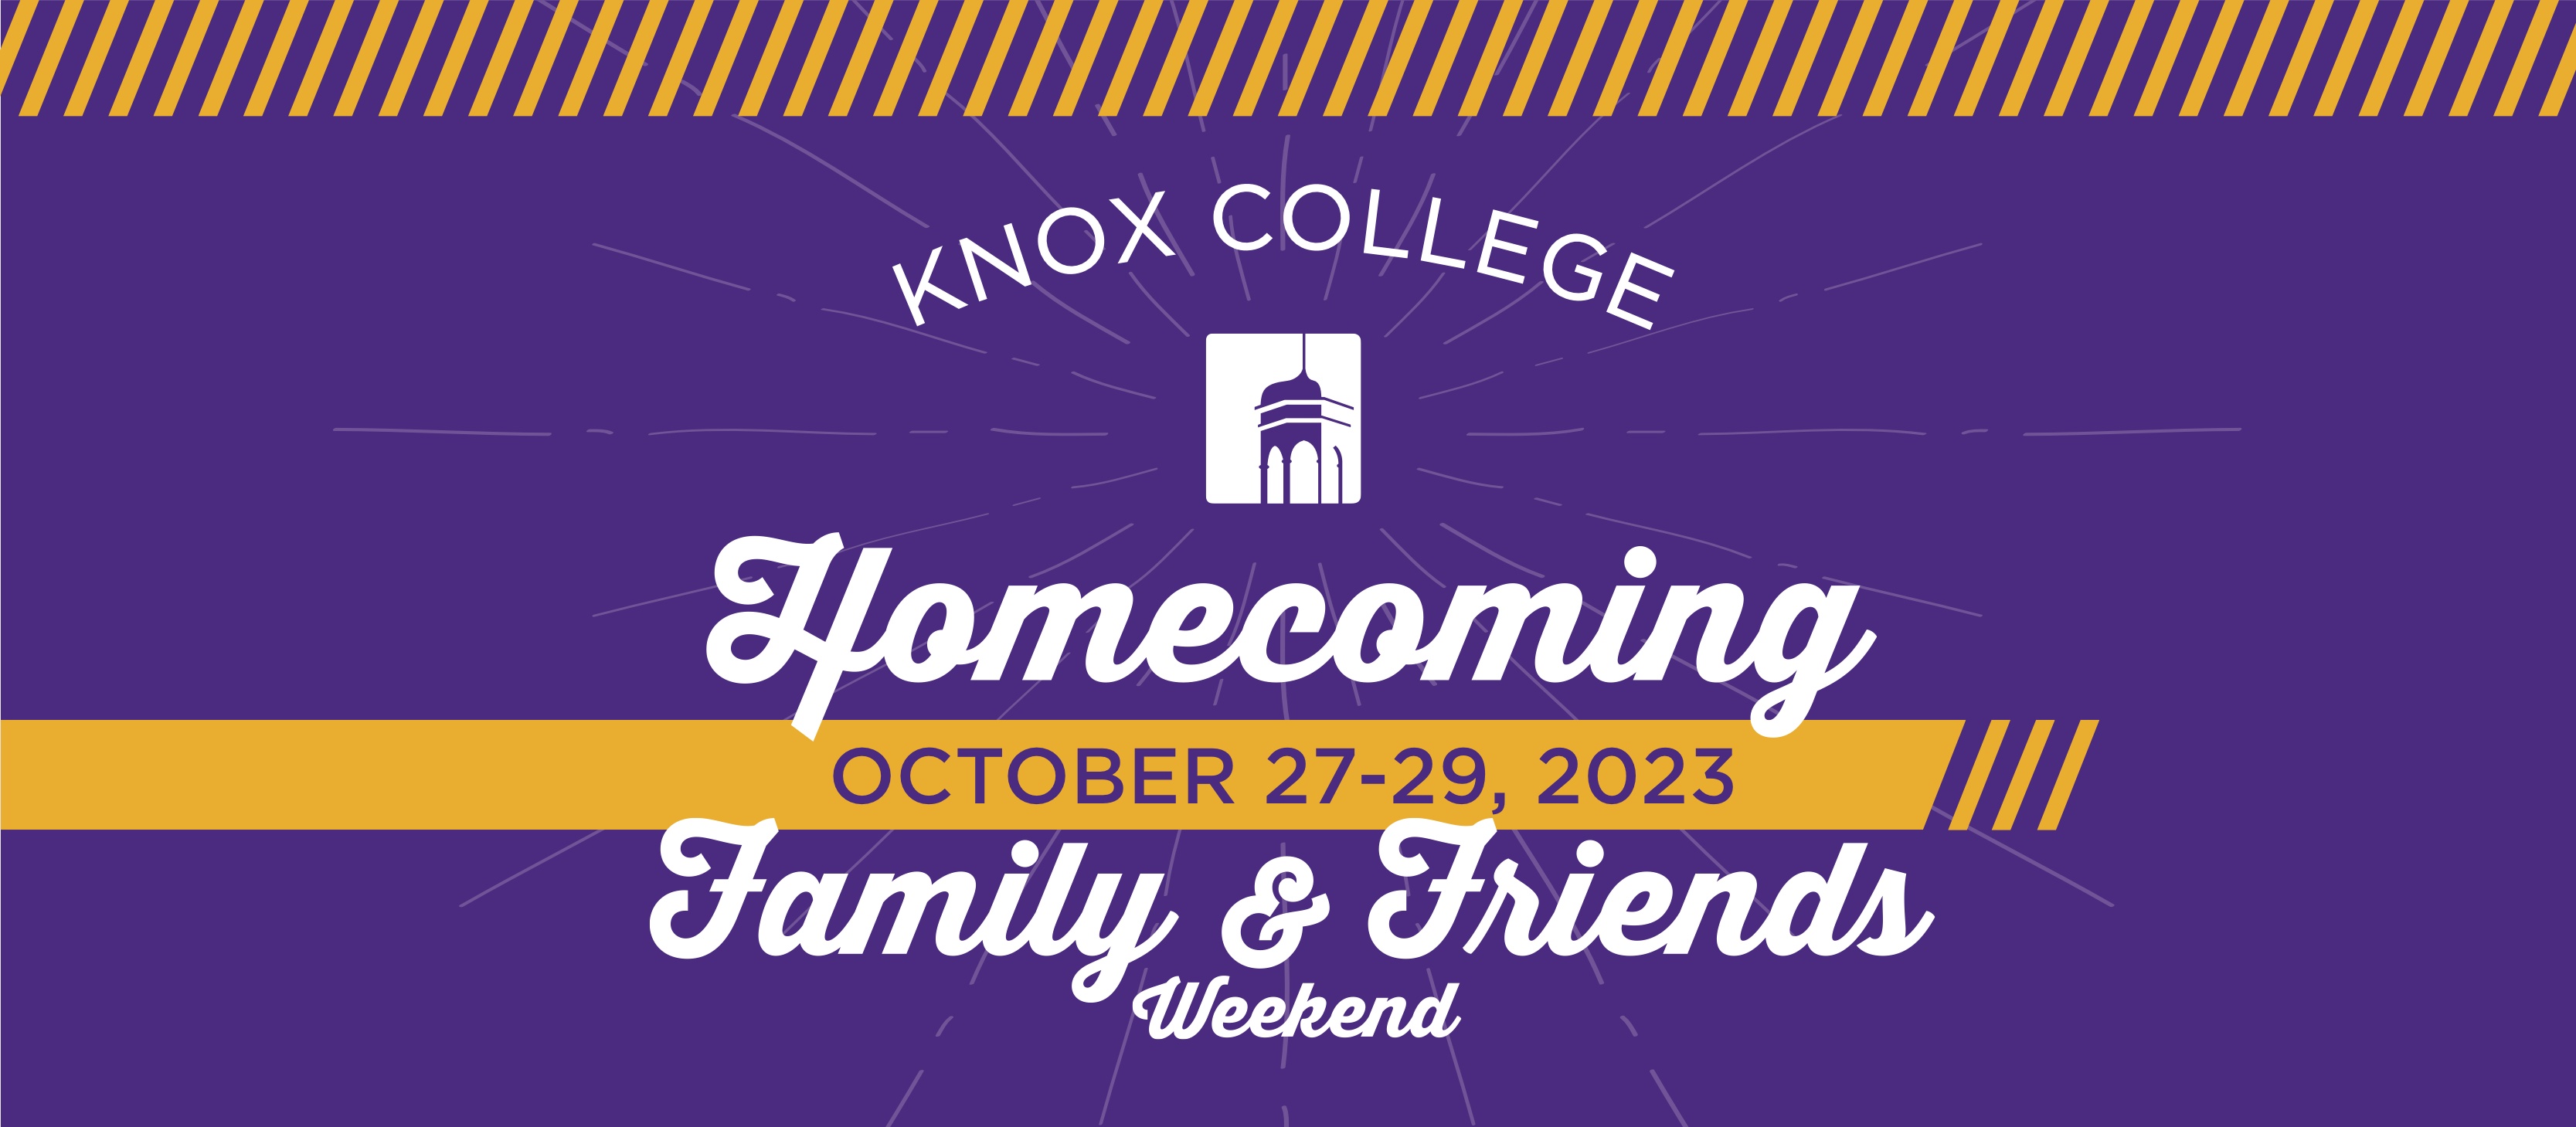 Knox College Homecoming, May 13-15, 2022